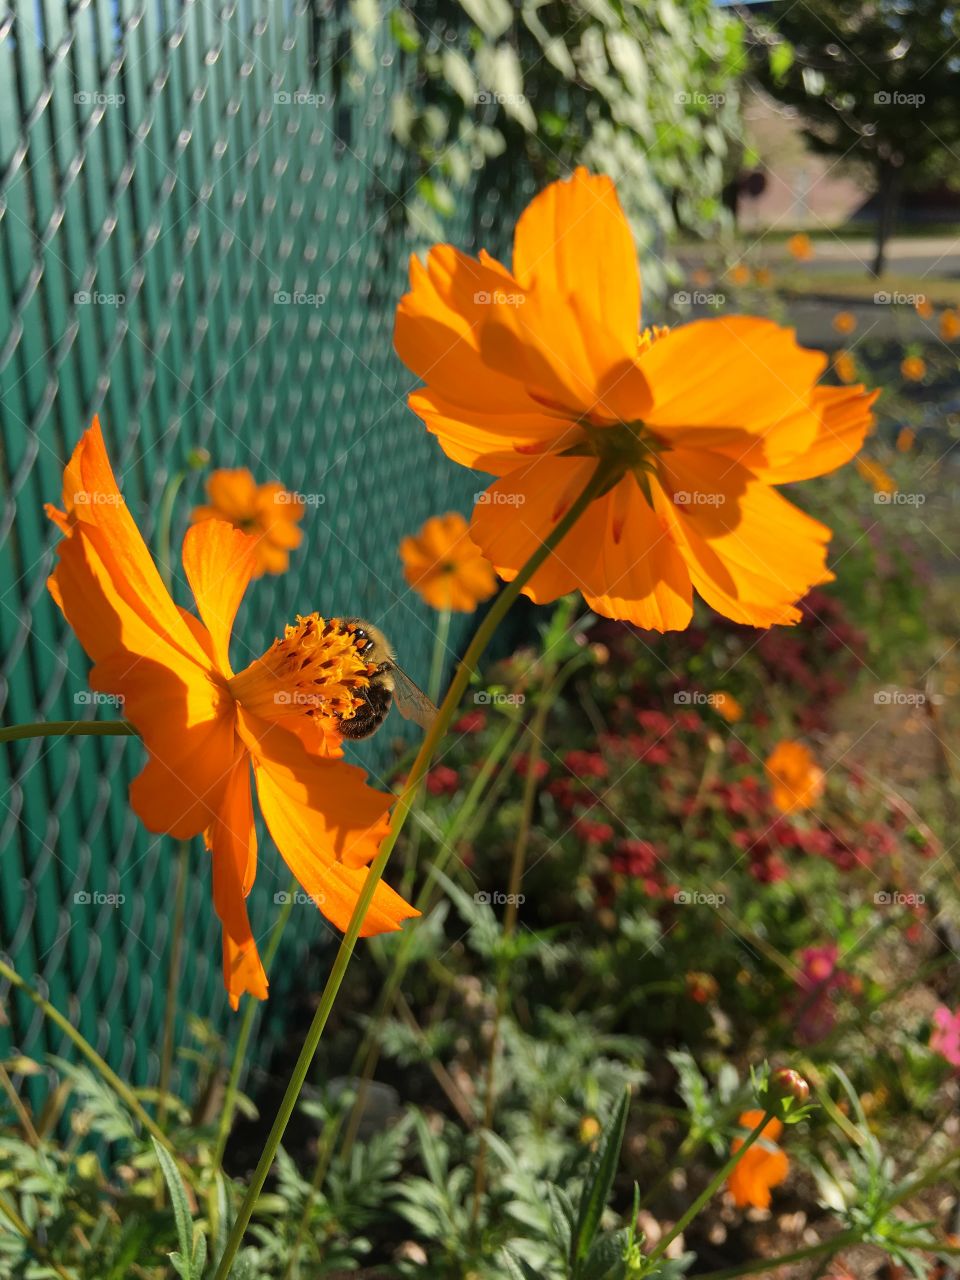 Orange flowers in morning sun with bumblebee